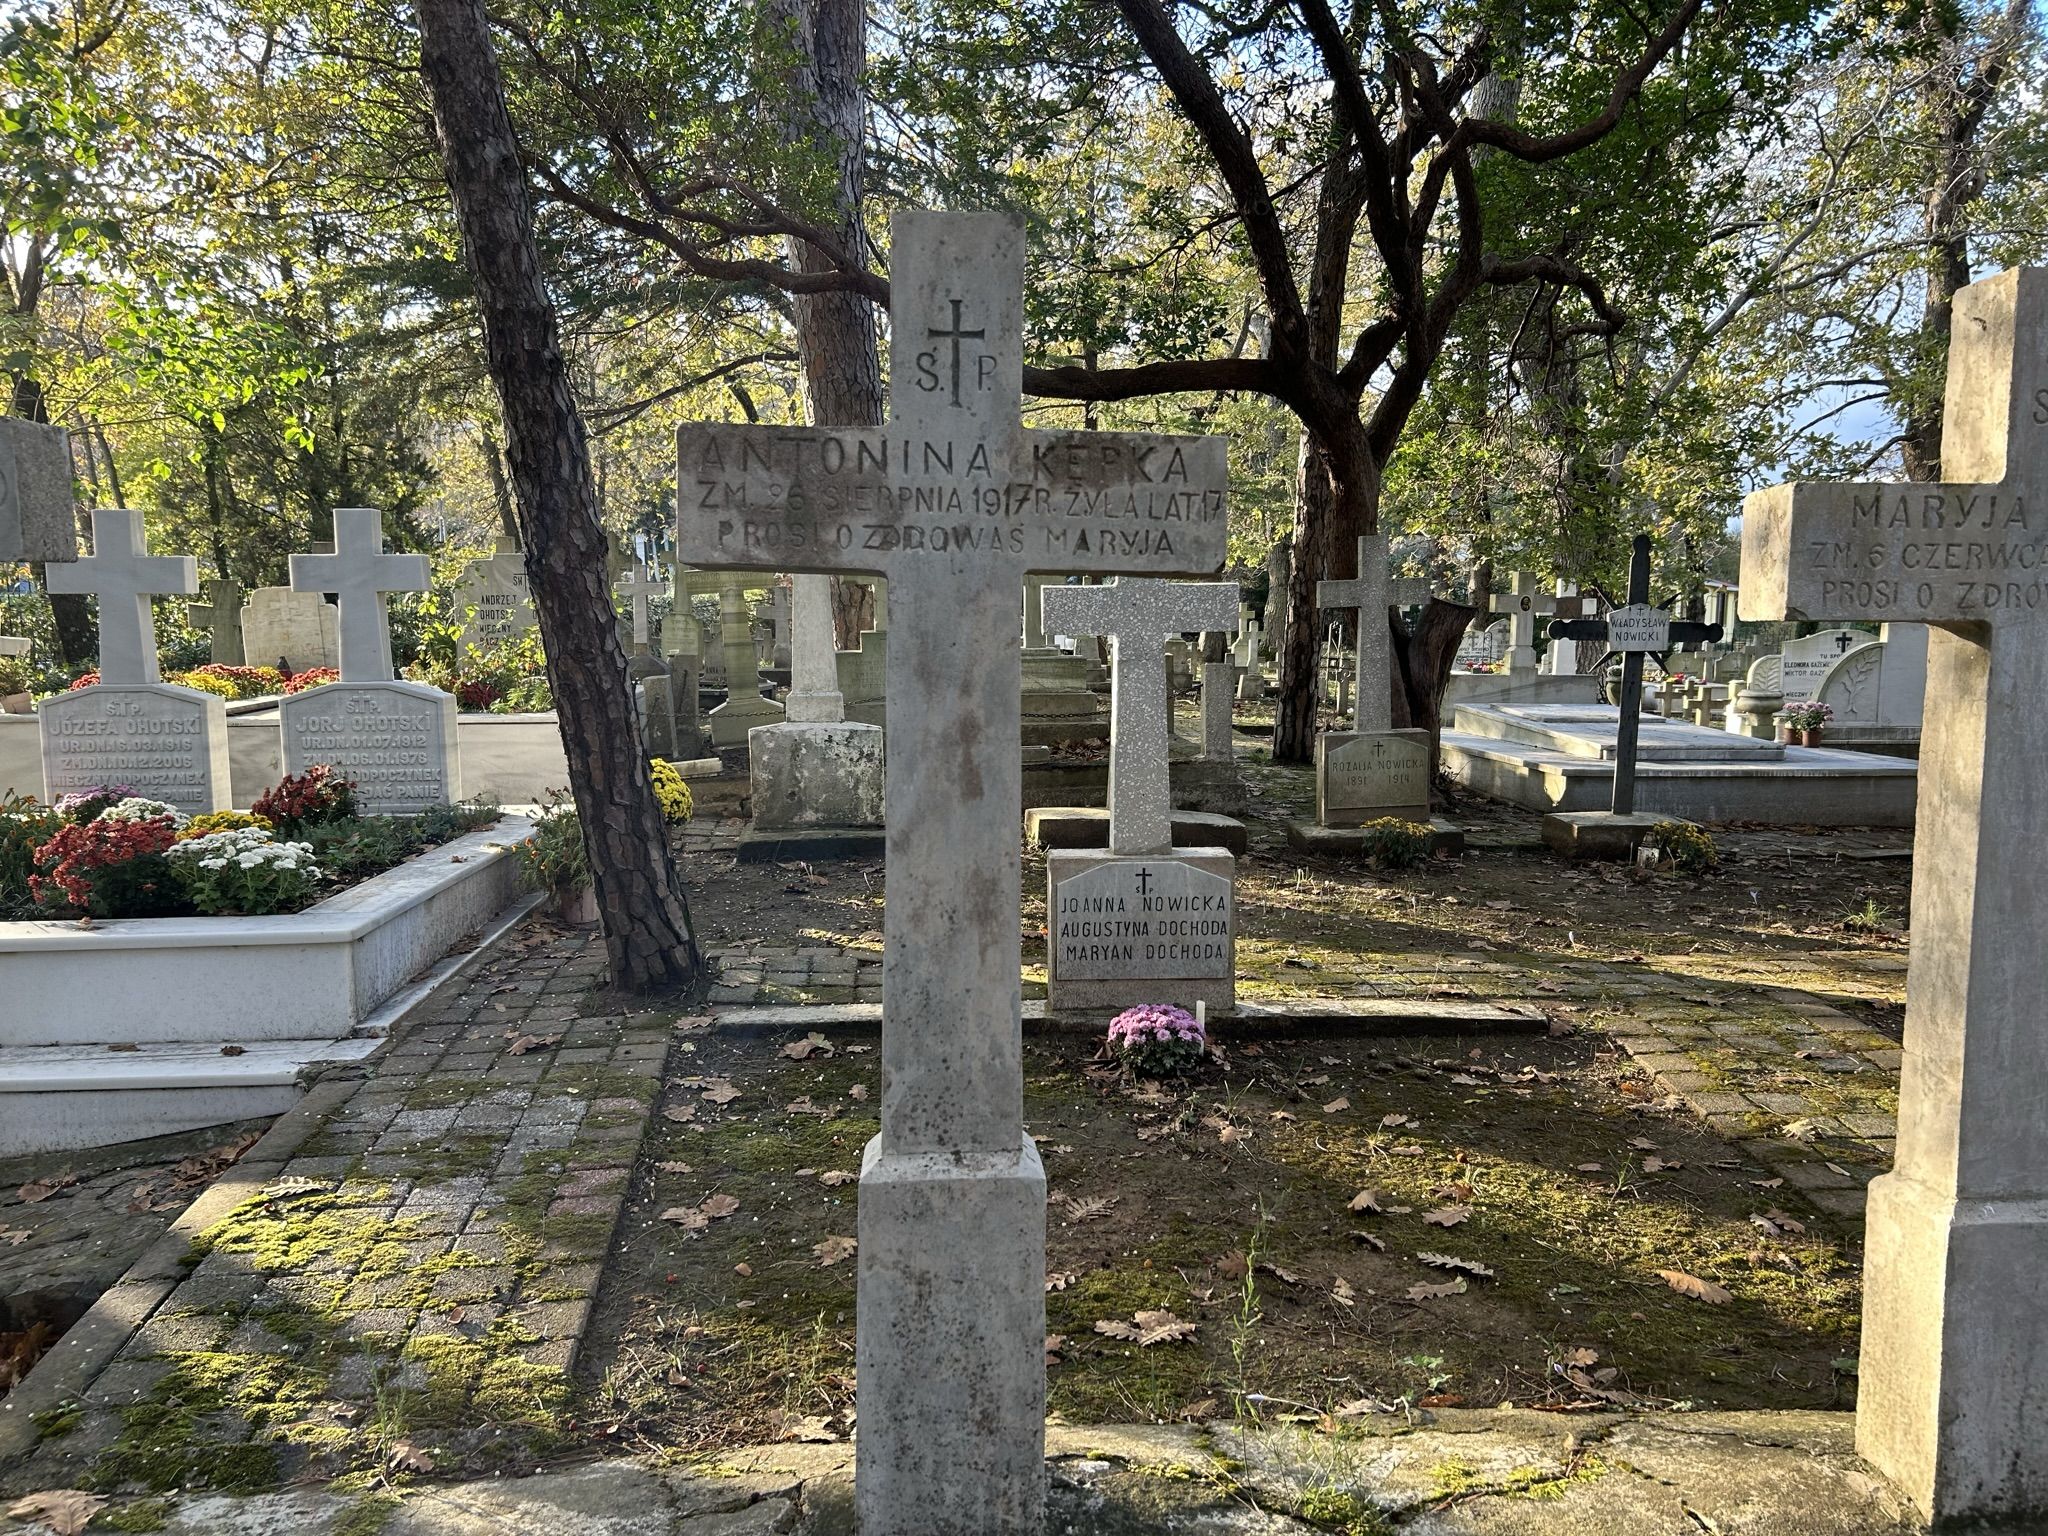 Tombstone of Antonina Kępka, Catholic cemetery in Adampol